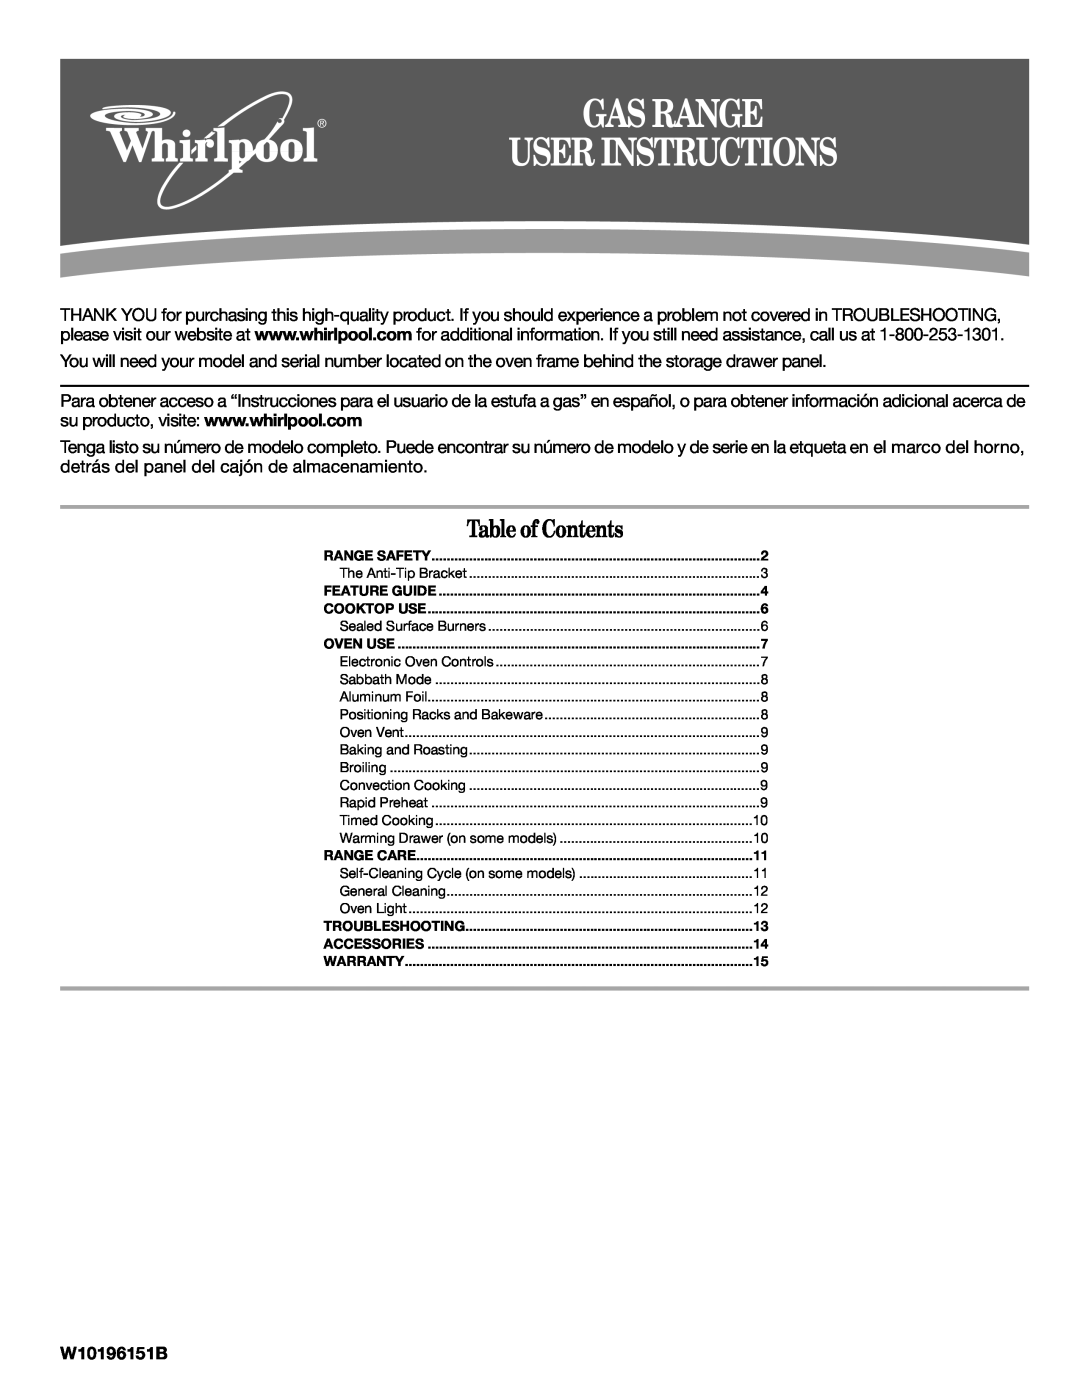 Whirlpool GFG471LVS warranty User Instructions, Gas Range, Table of Contents, W10196151B 